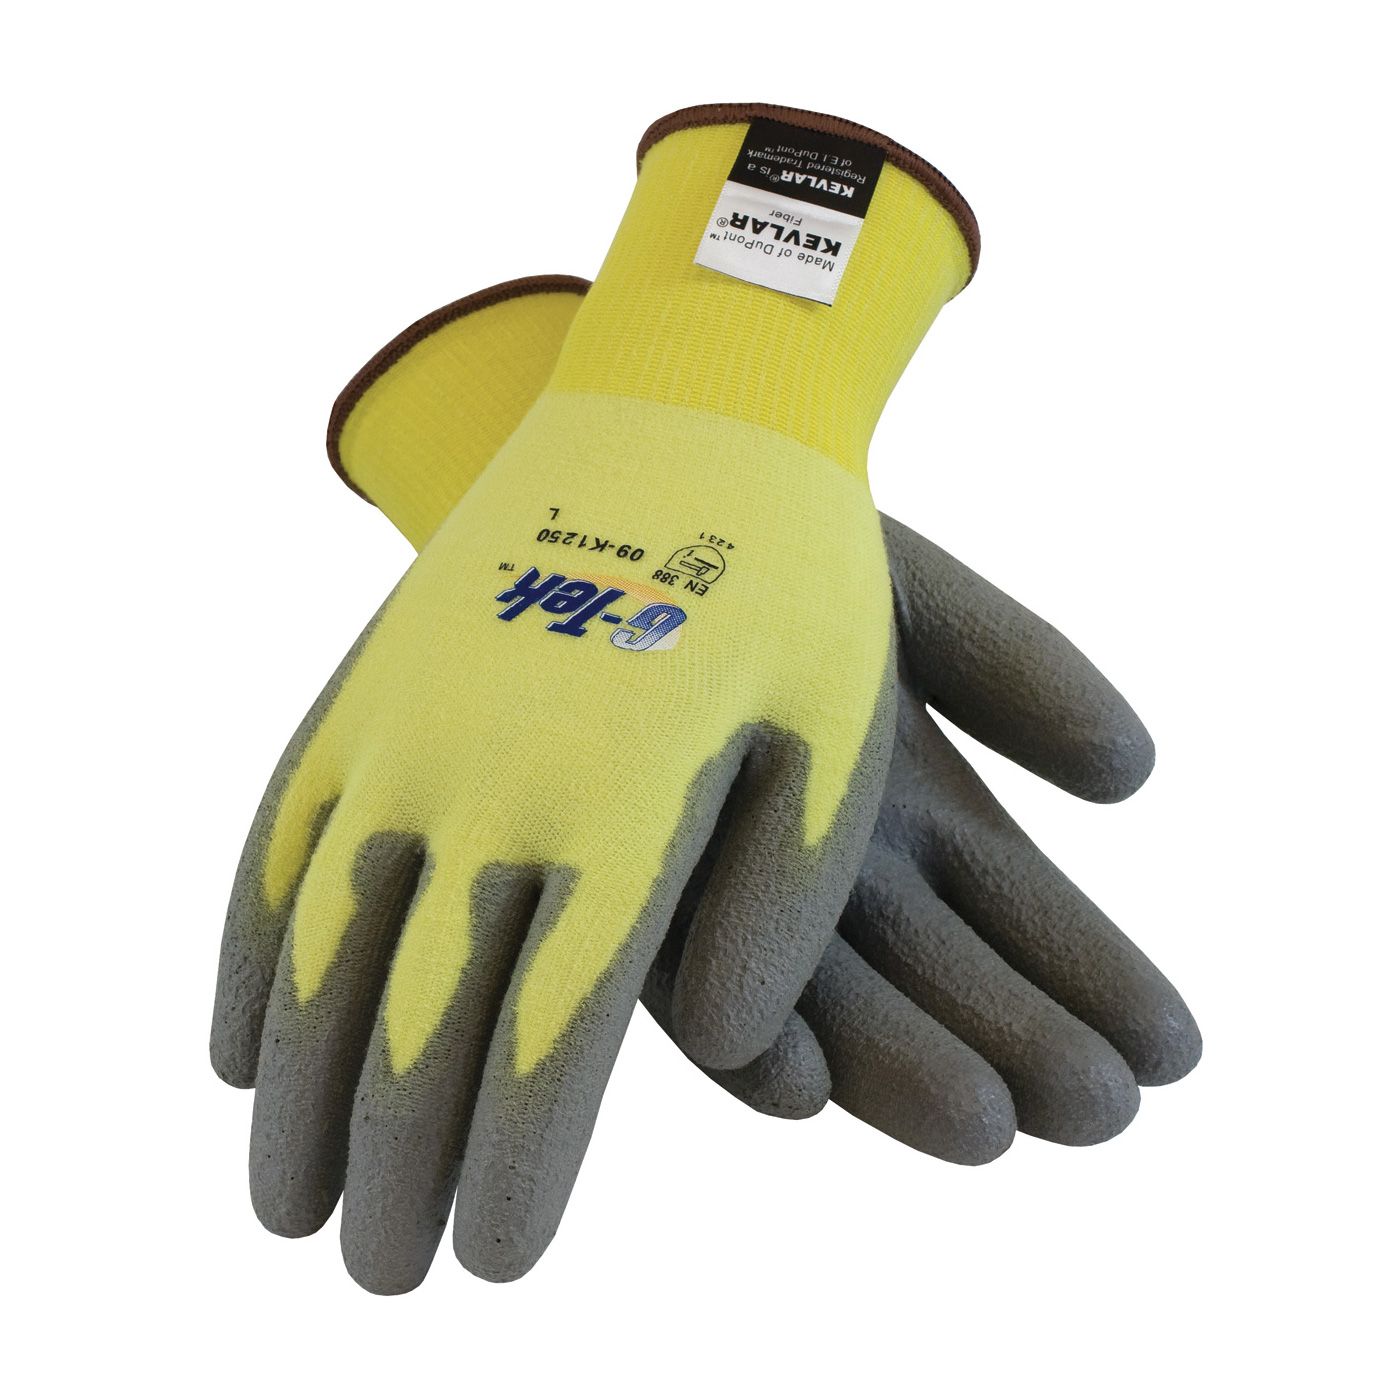 PIP G-Tek KEV 09-K1250 Knit Kevlar/Lycra Glove With Polyurethane Grip, Box of 12 Pairs